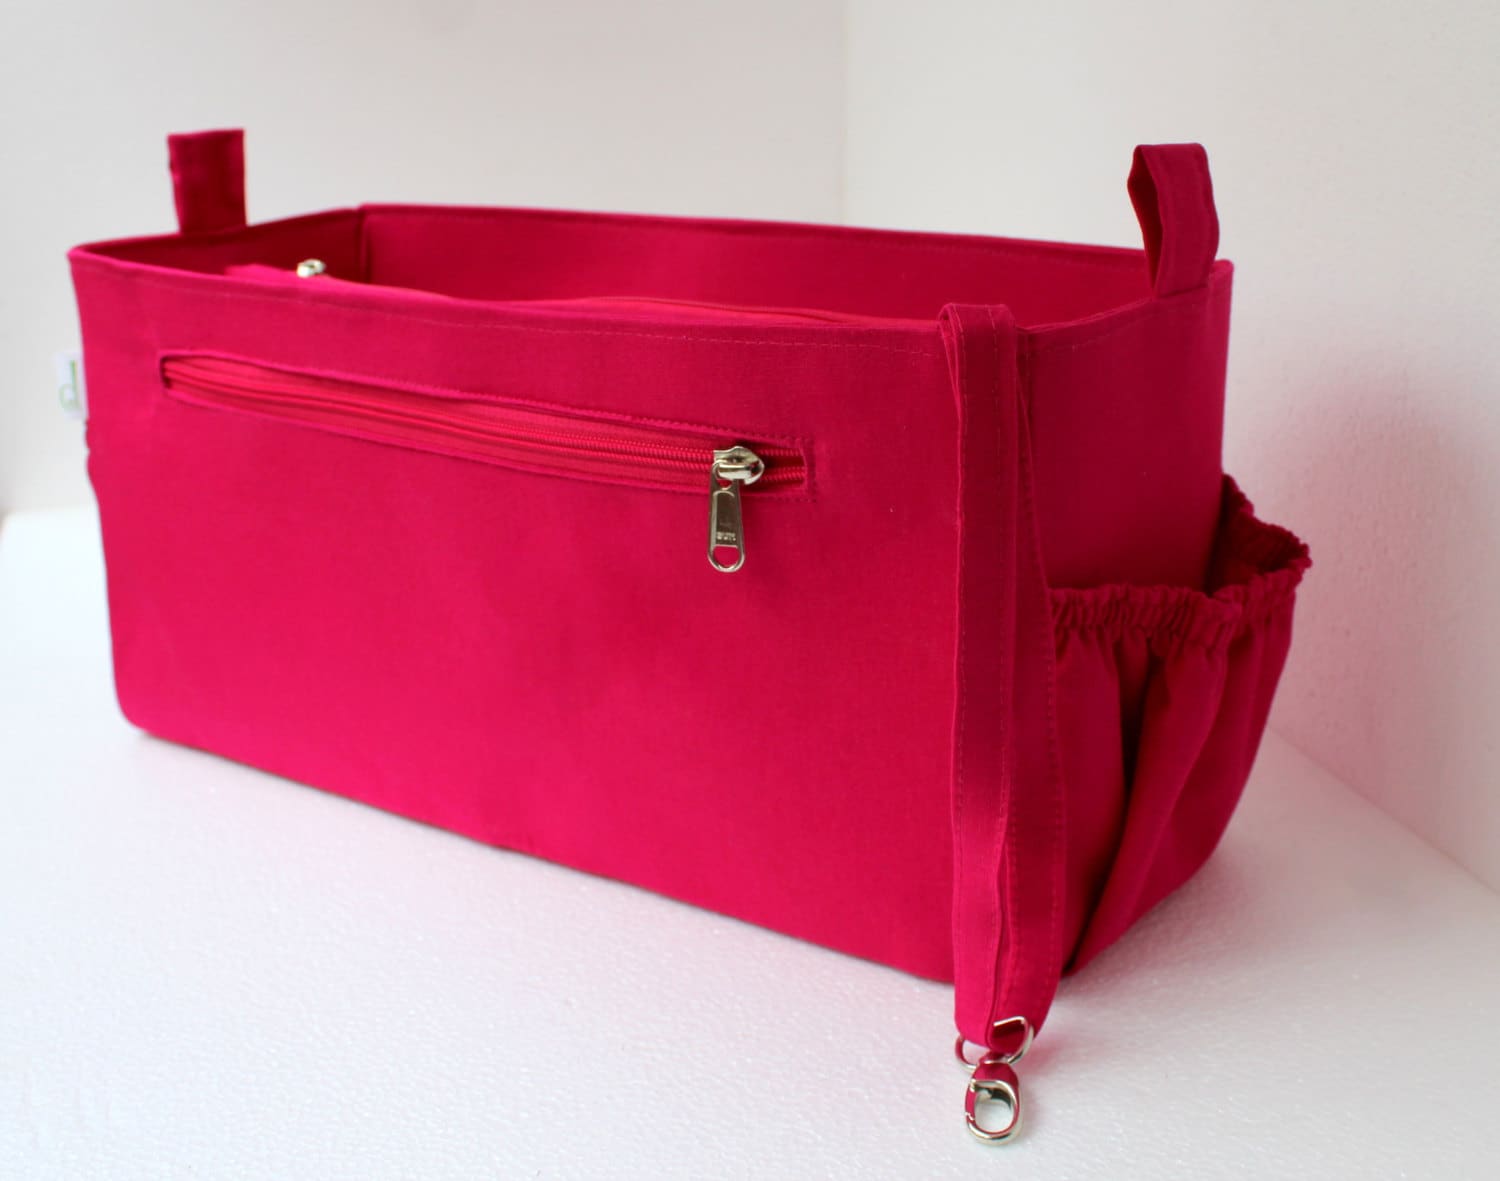 LOUIS VUITTON TRANSPARENT PLEXIGLASS BOX SCOTT ROSE BALLERINE